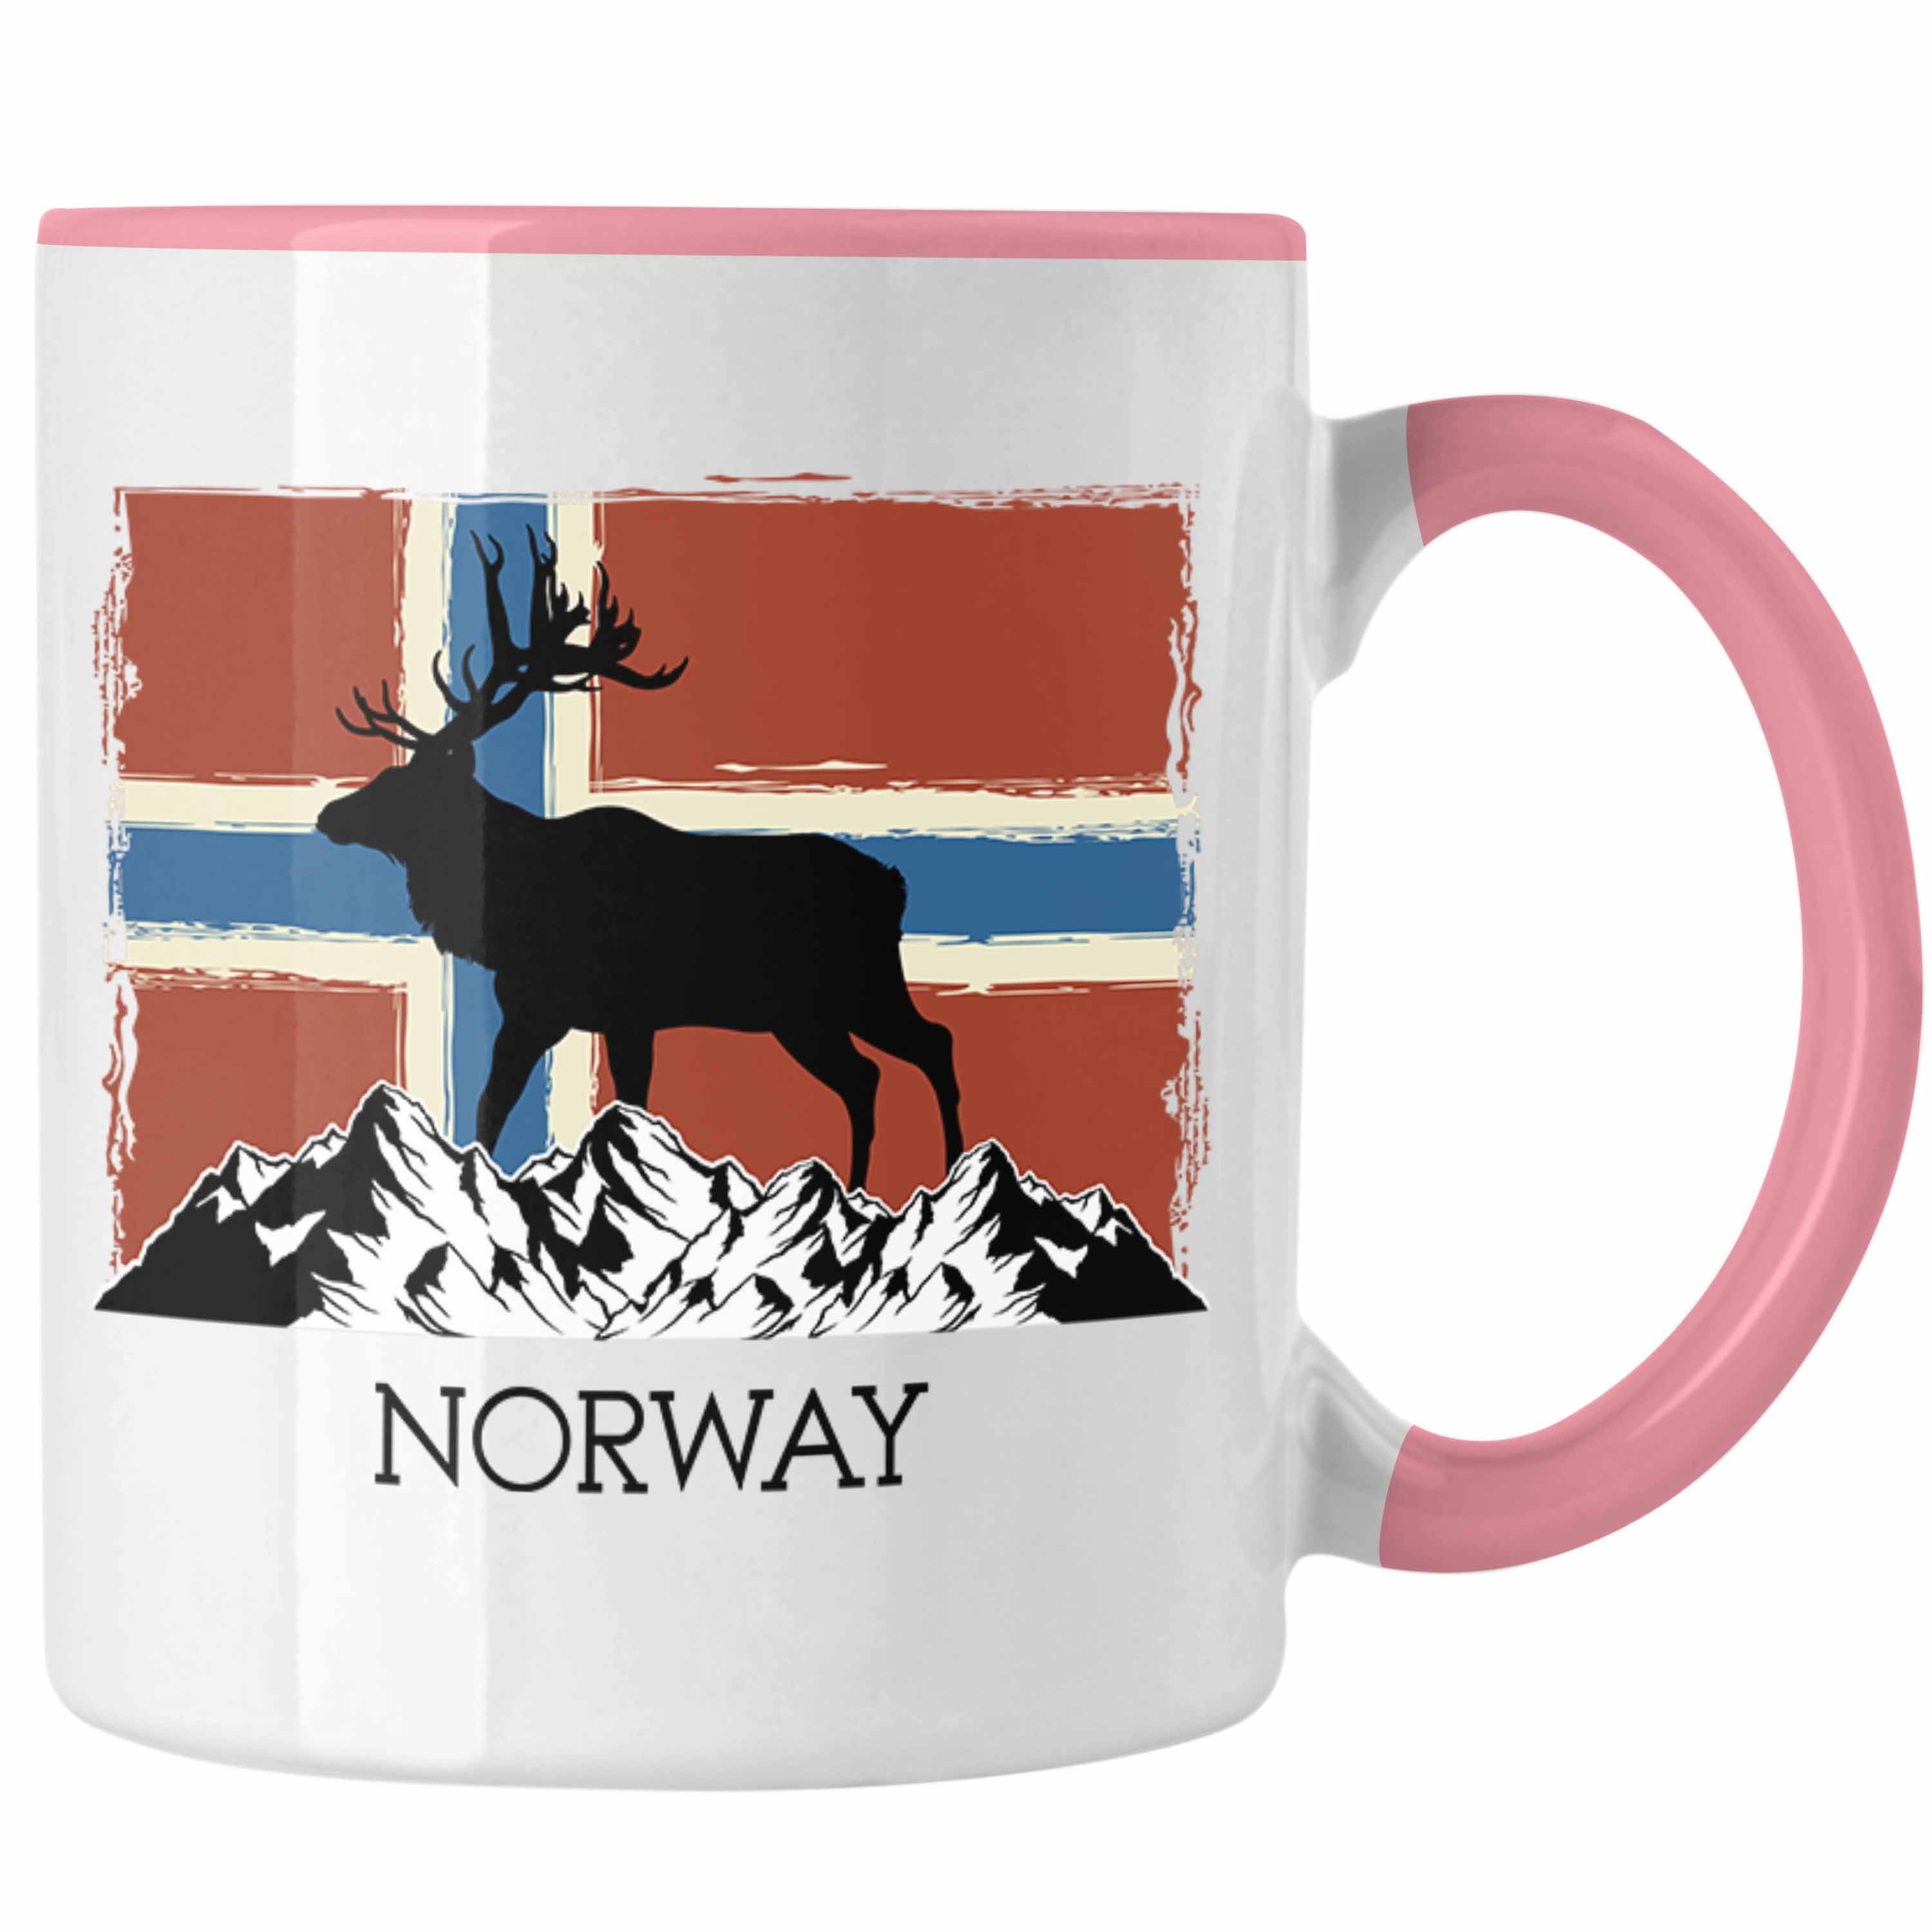 Trendation Tasse Trendation - Norwegen Geschenke Tasse Flagge Nordkap Elch Norway Rosa | Teetassen